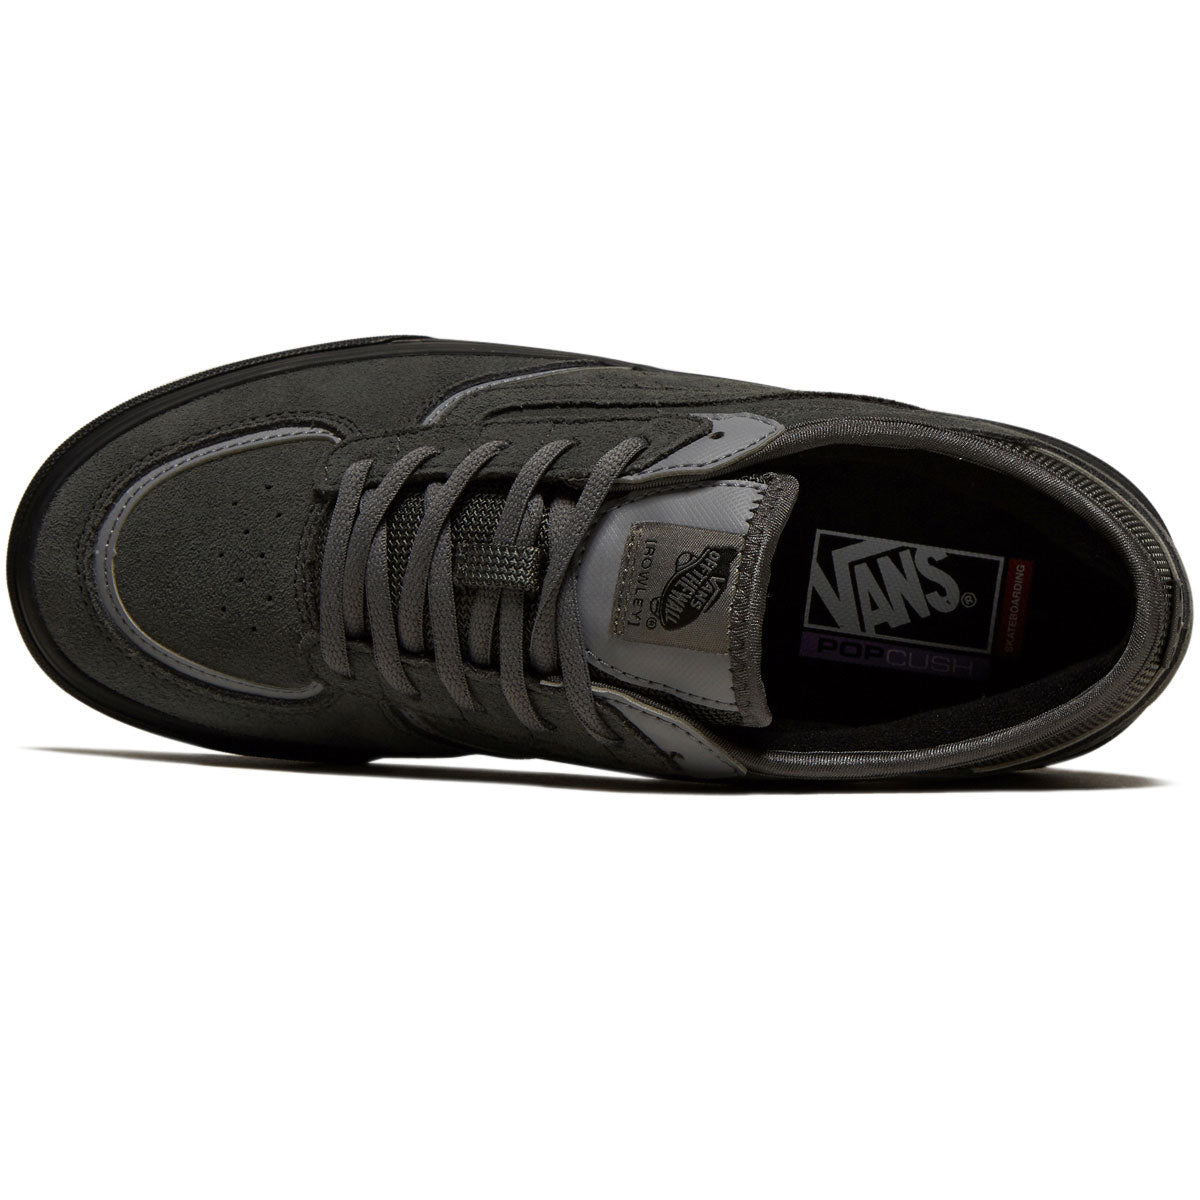 Vans Skate Rowley Shoes - Suede Charcoal/Black image 3